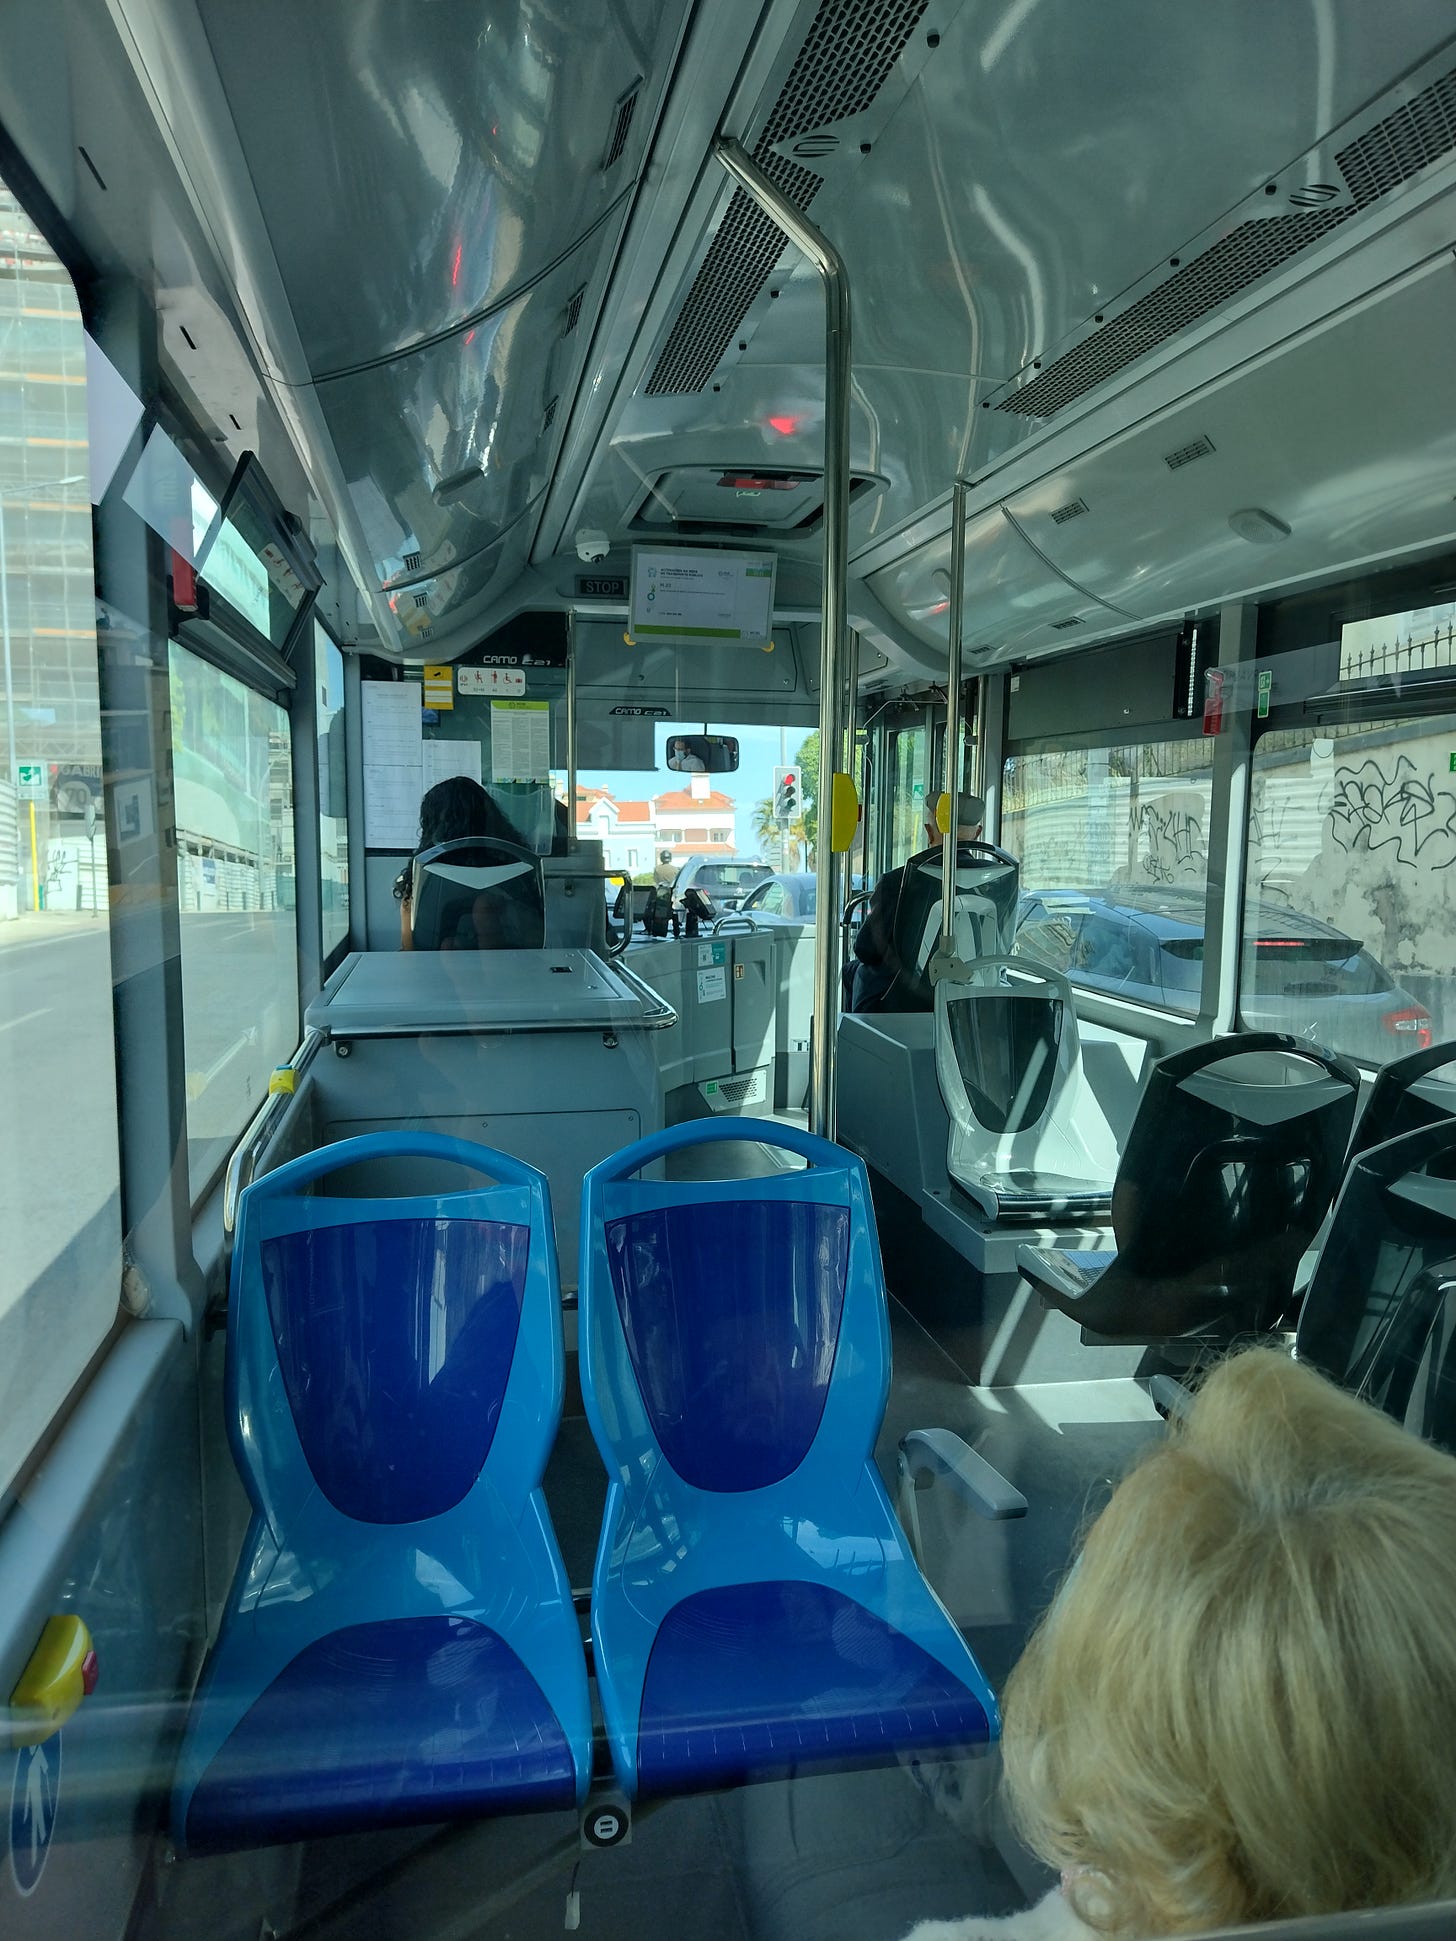 Inside a bus.